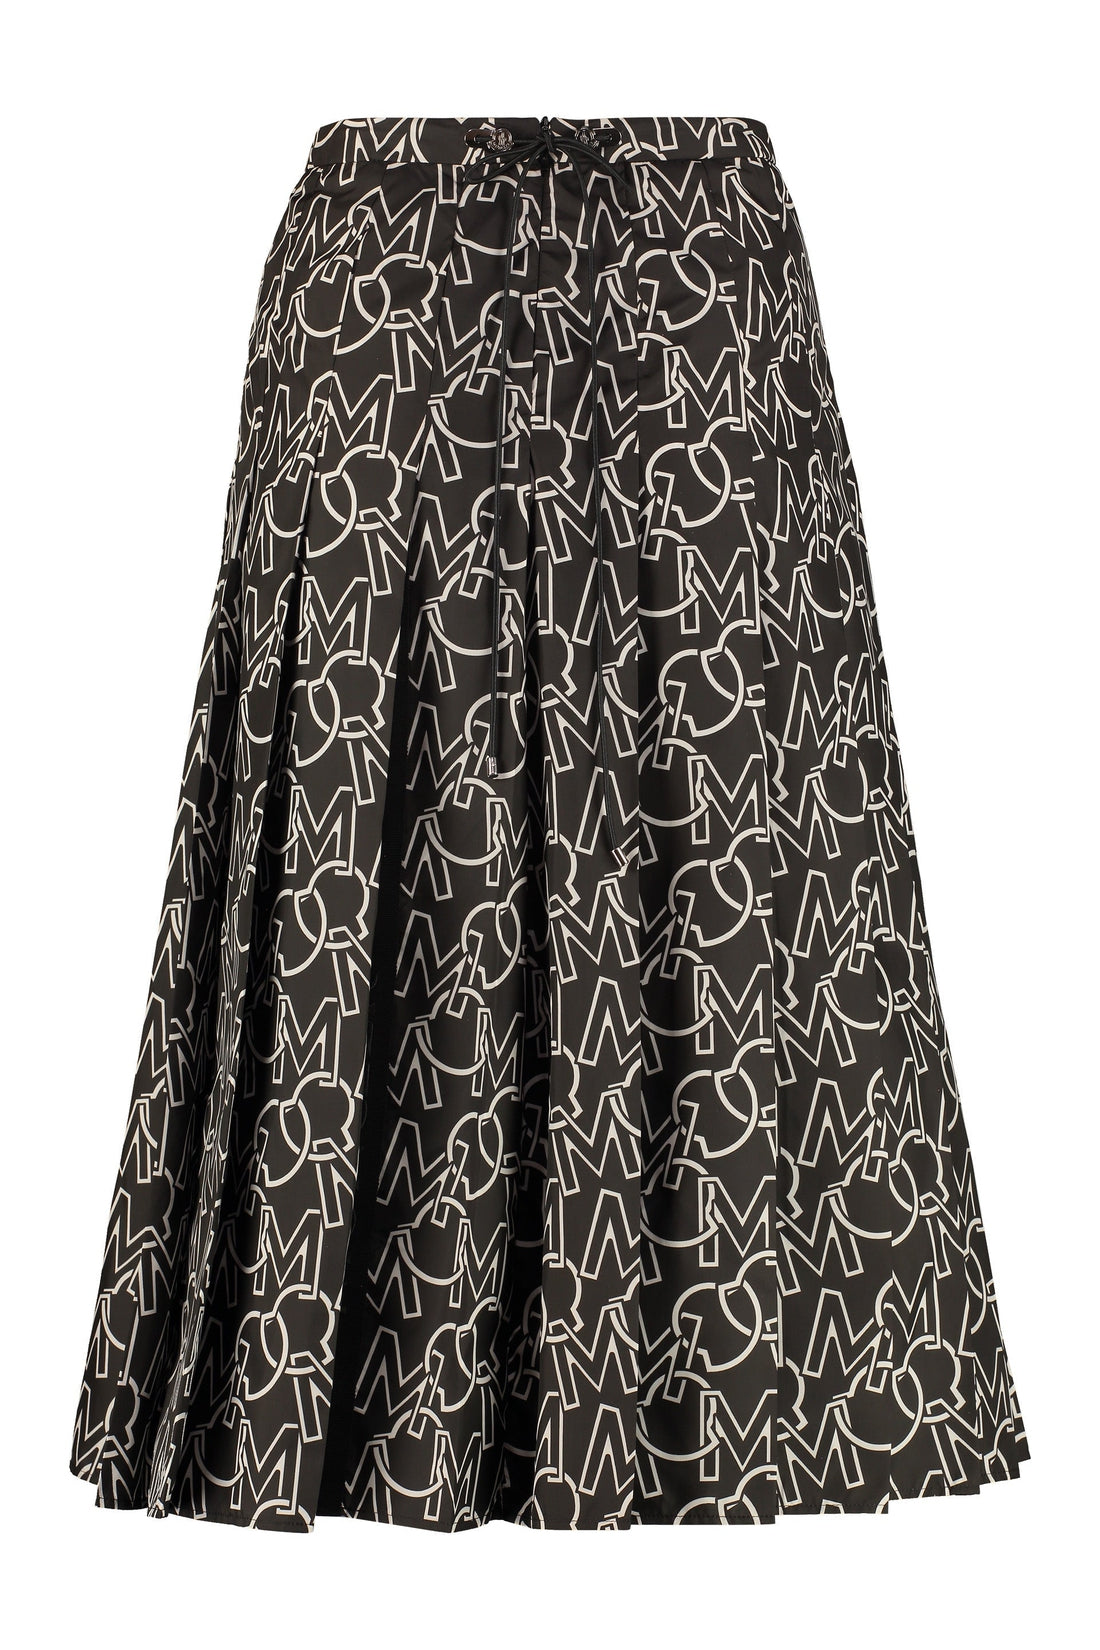 Moncler-OUTLET-SALE-Technical fabric skirt-ARCHIVIST